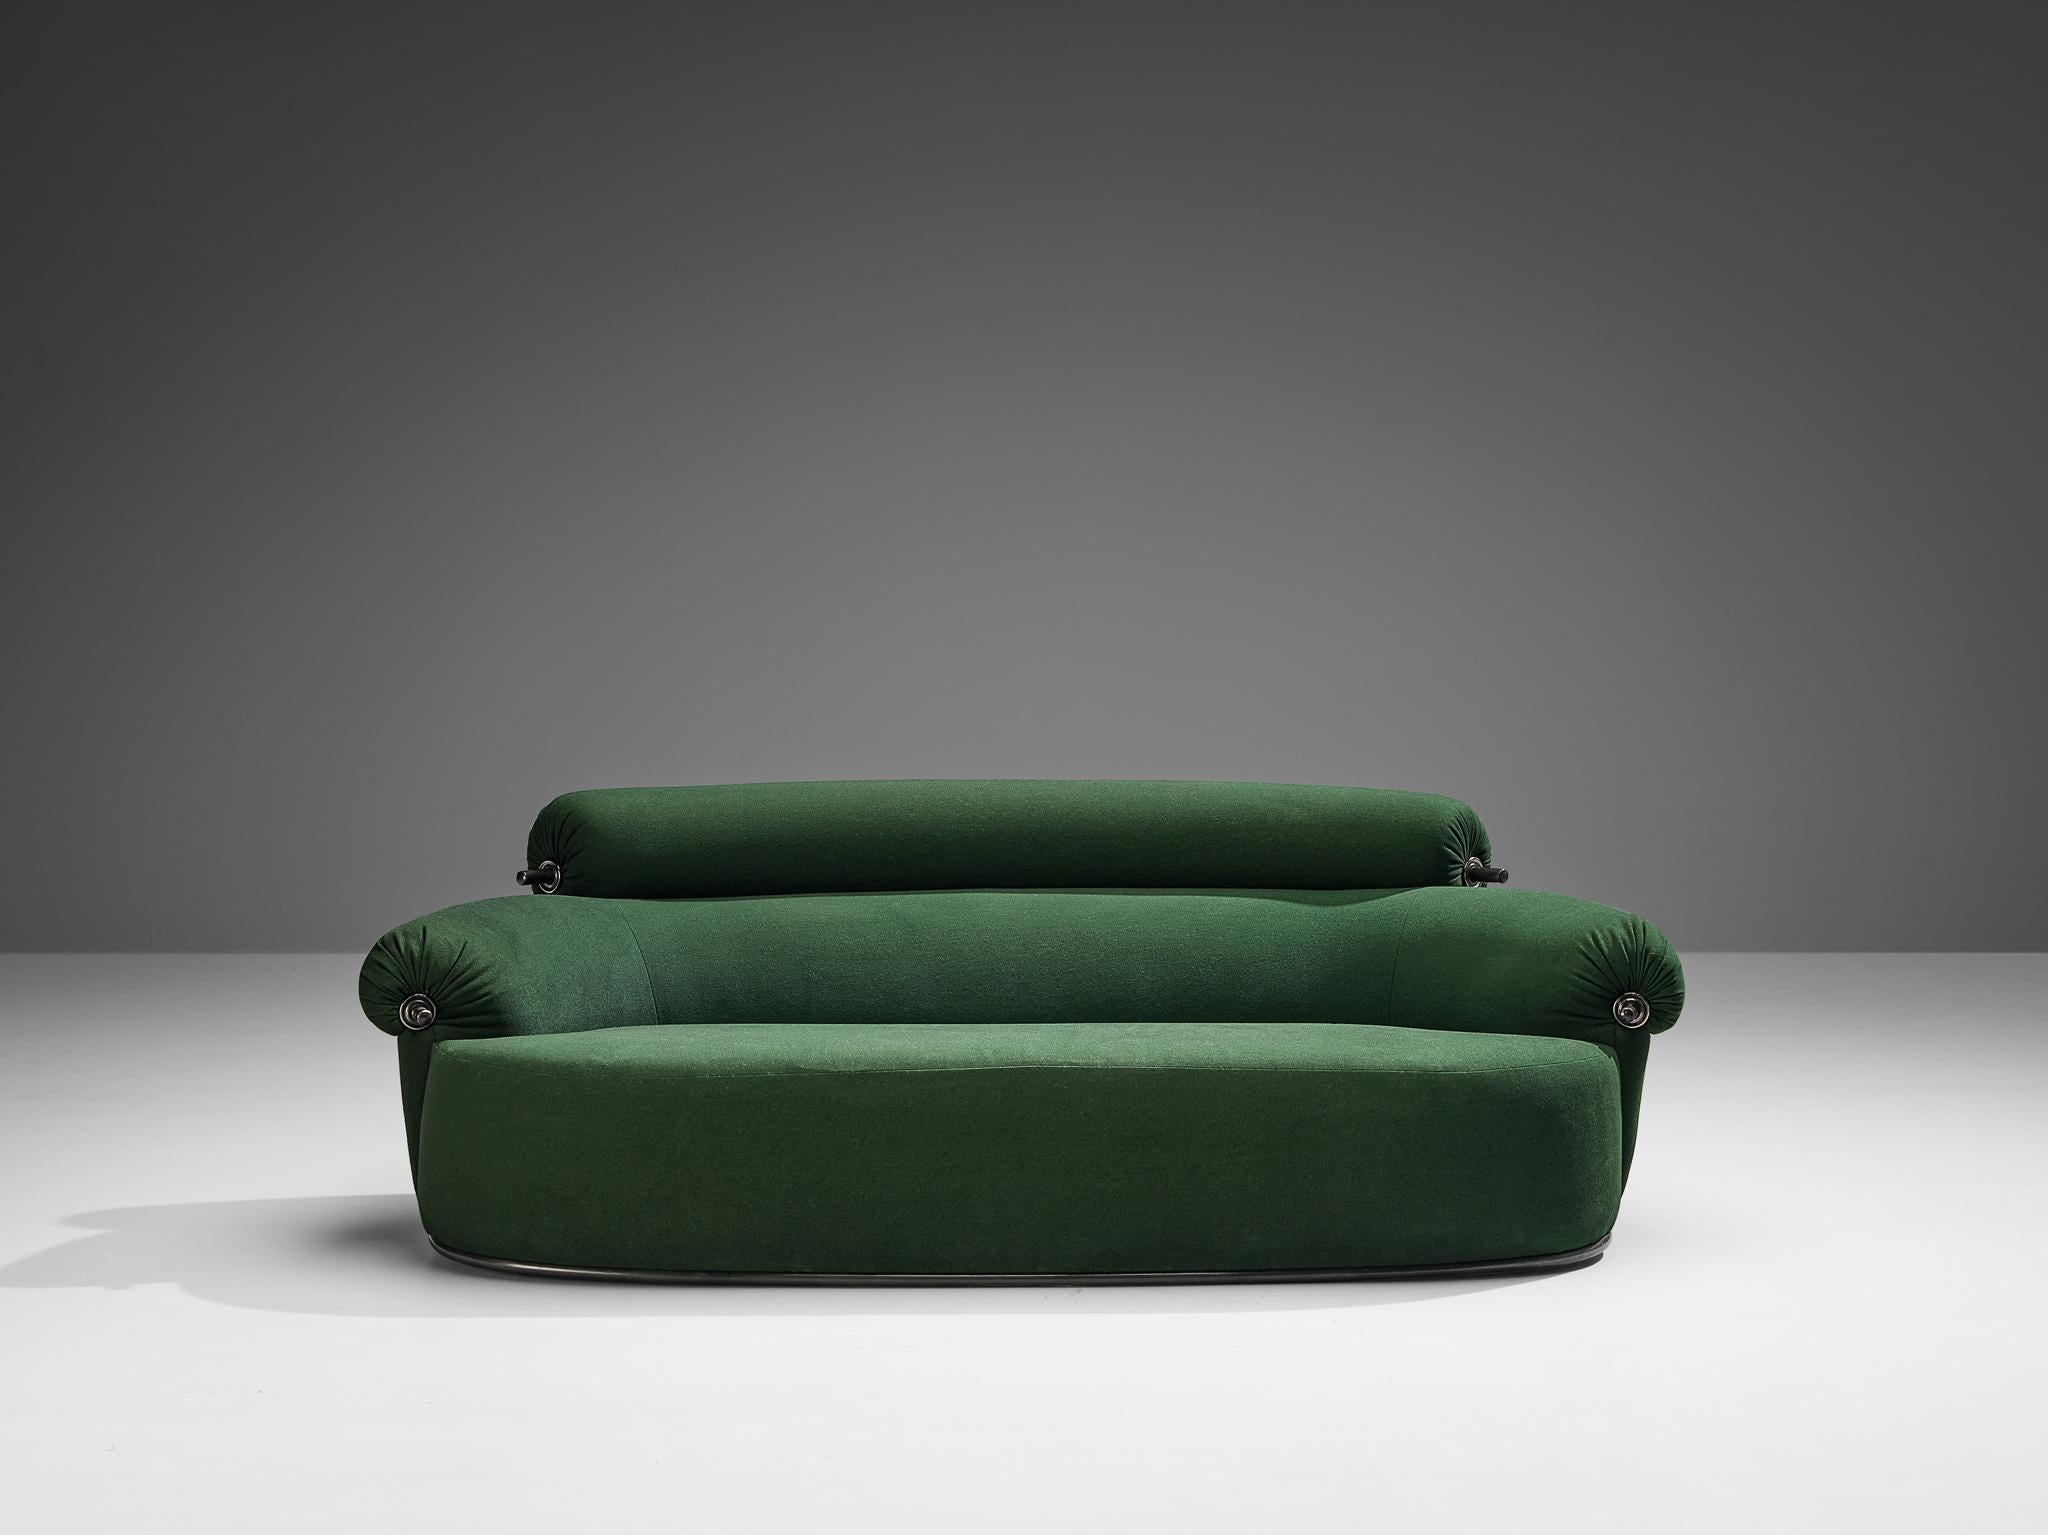 Luigi Caccia Dominioni for Azucena ‘Toro’ Sofa in Dark Forest Green Upholstery In Good Condition For Sale In Waalwijk, NL